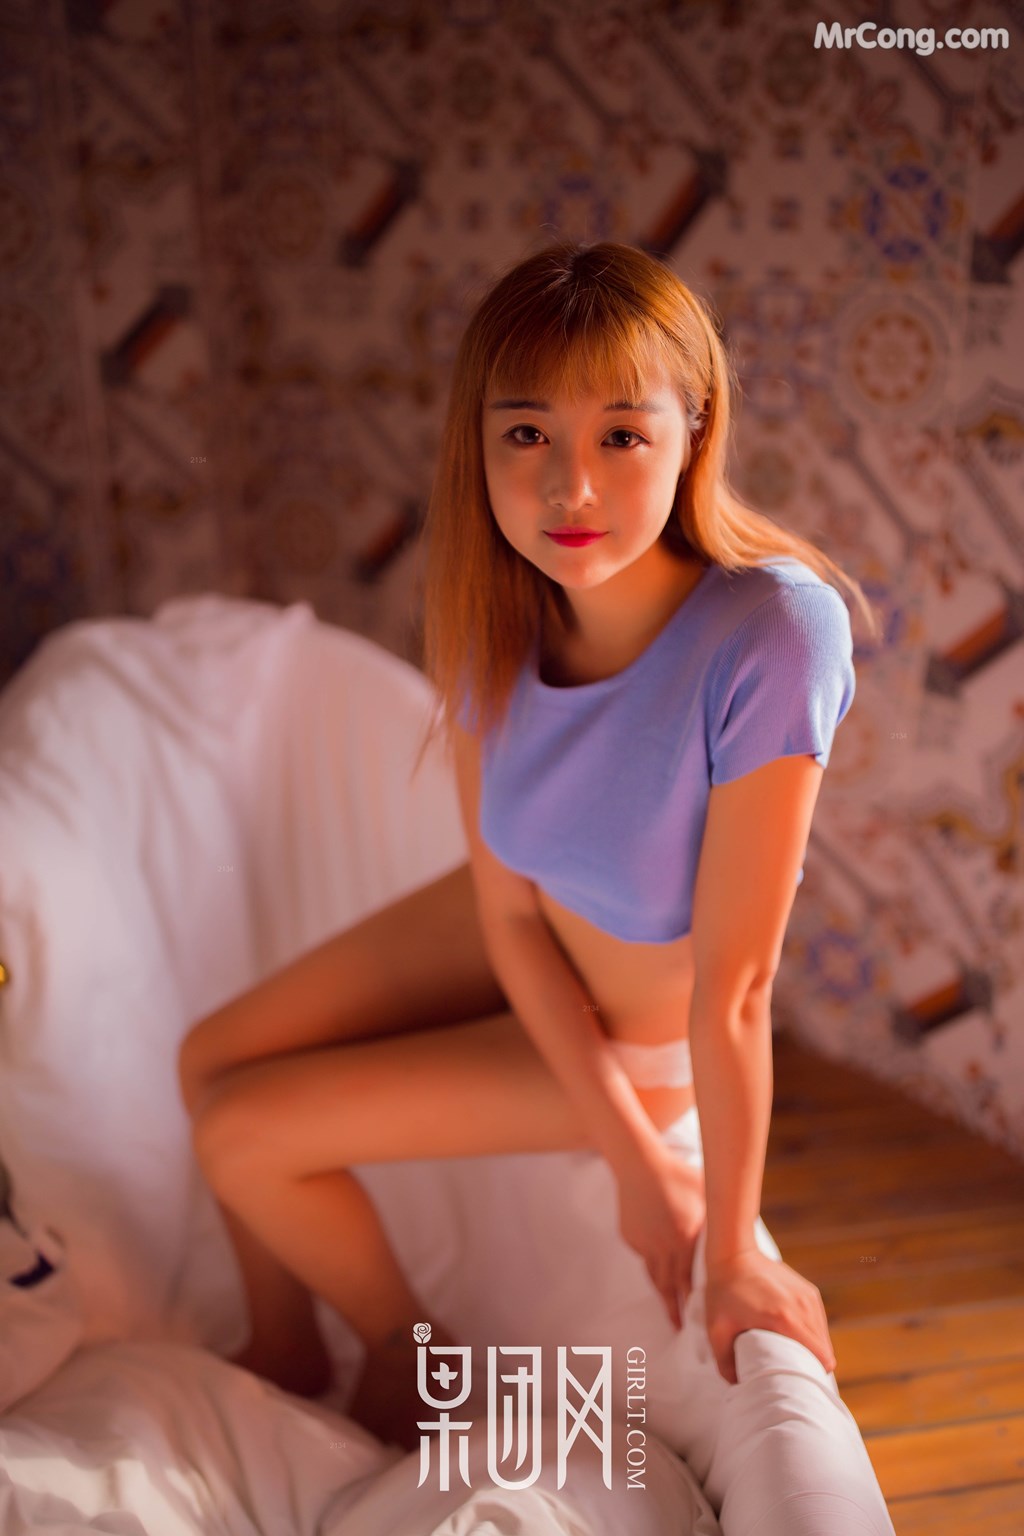 GIRLT XCJX No.021: Model Li Shi Han (李诗 涵 baby) (43 pictures) photo 2-1